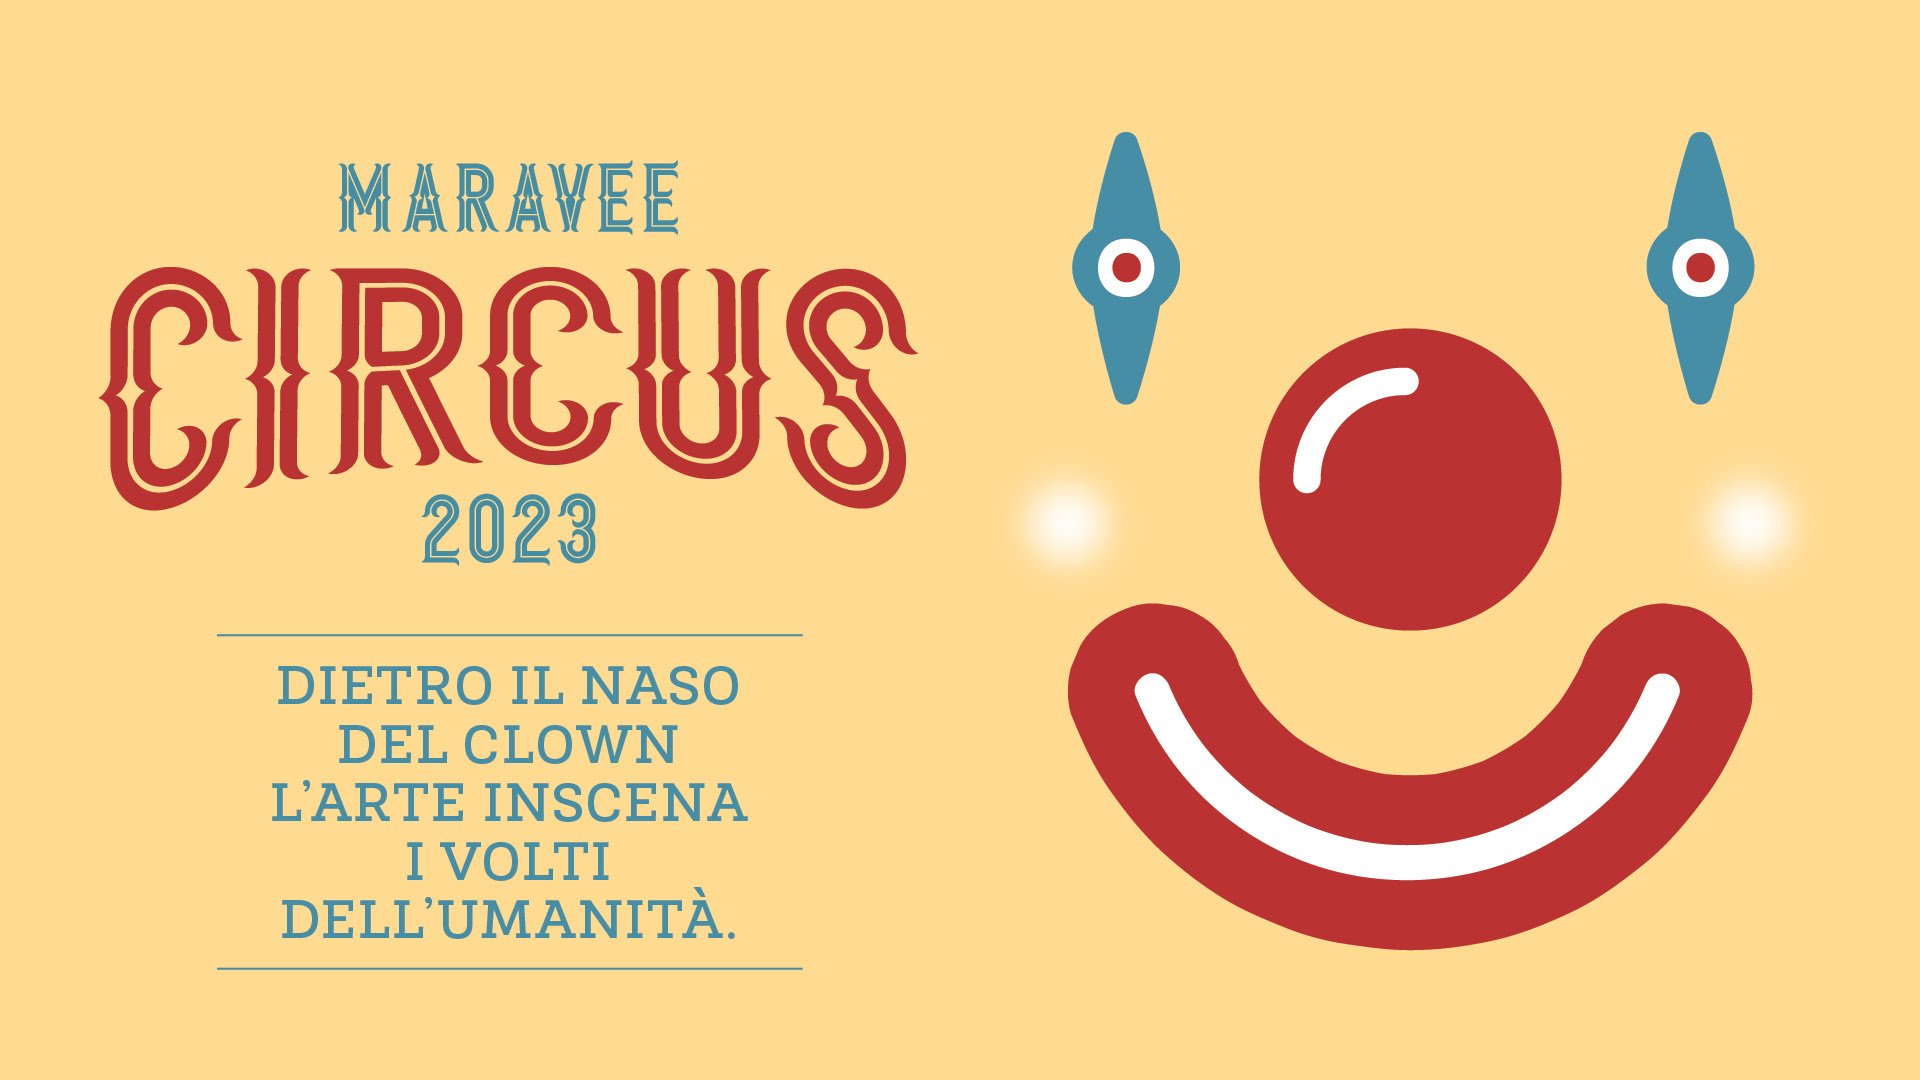 Festival Maravee Circus 2023